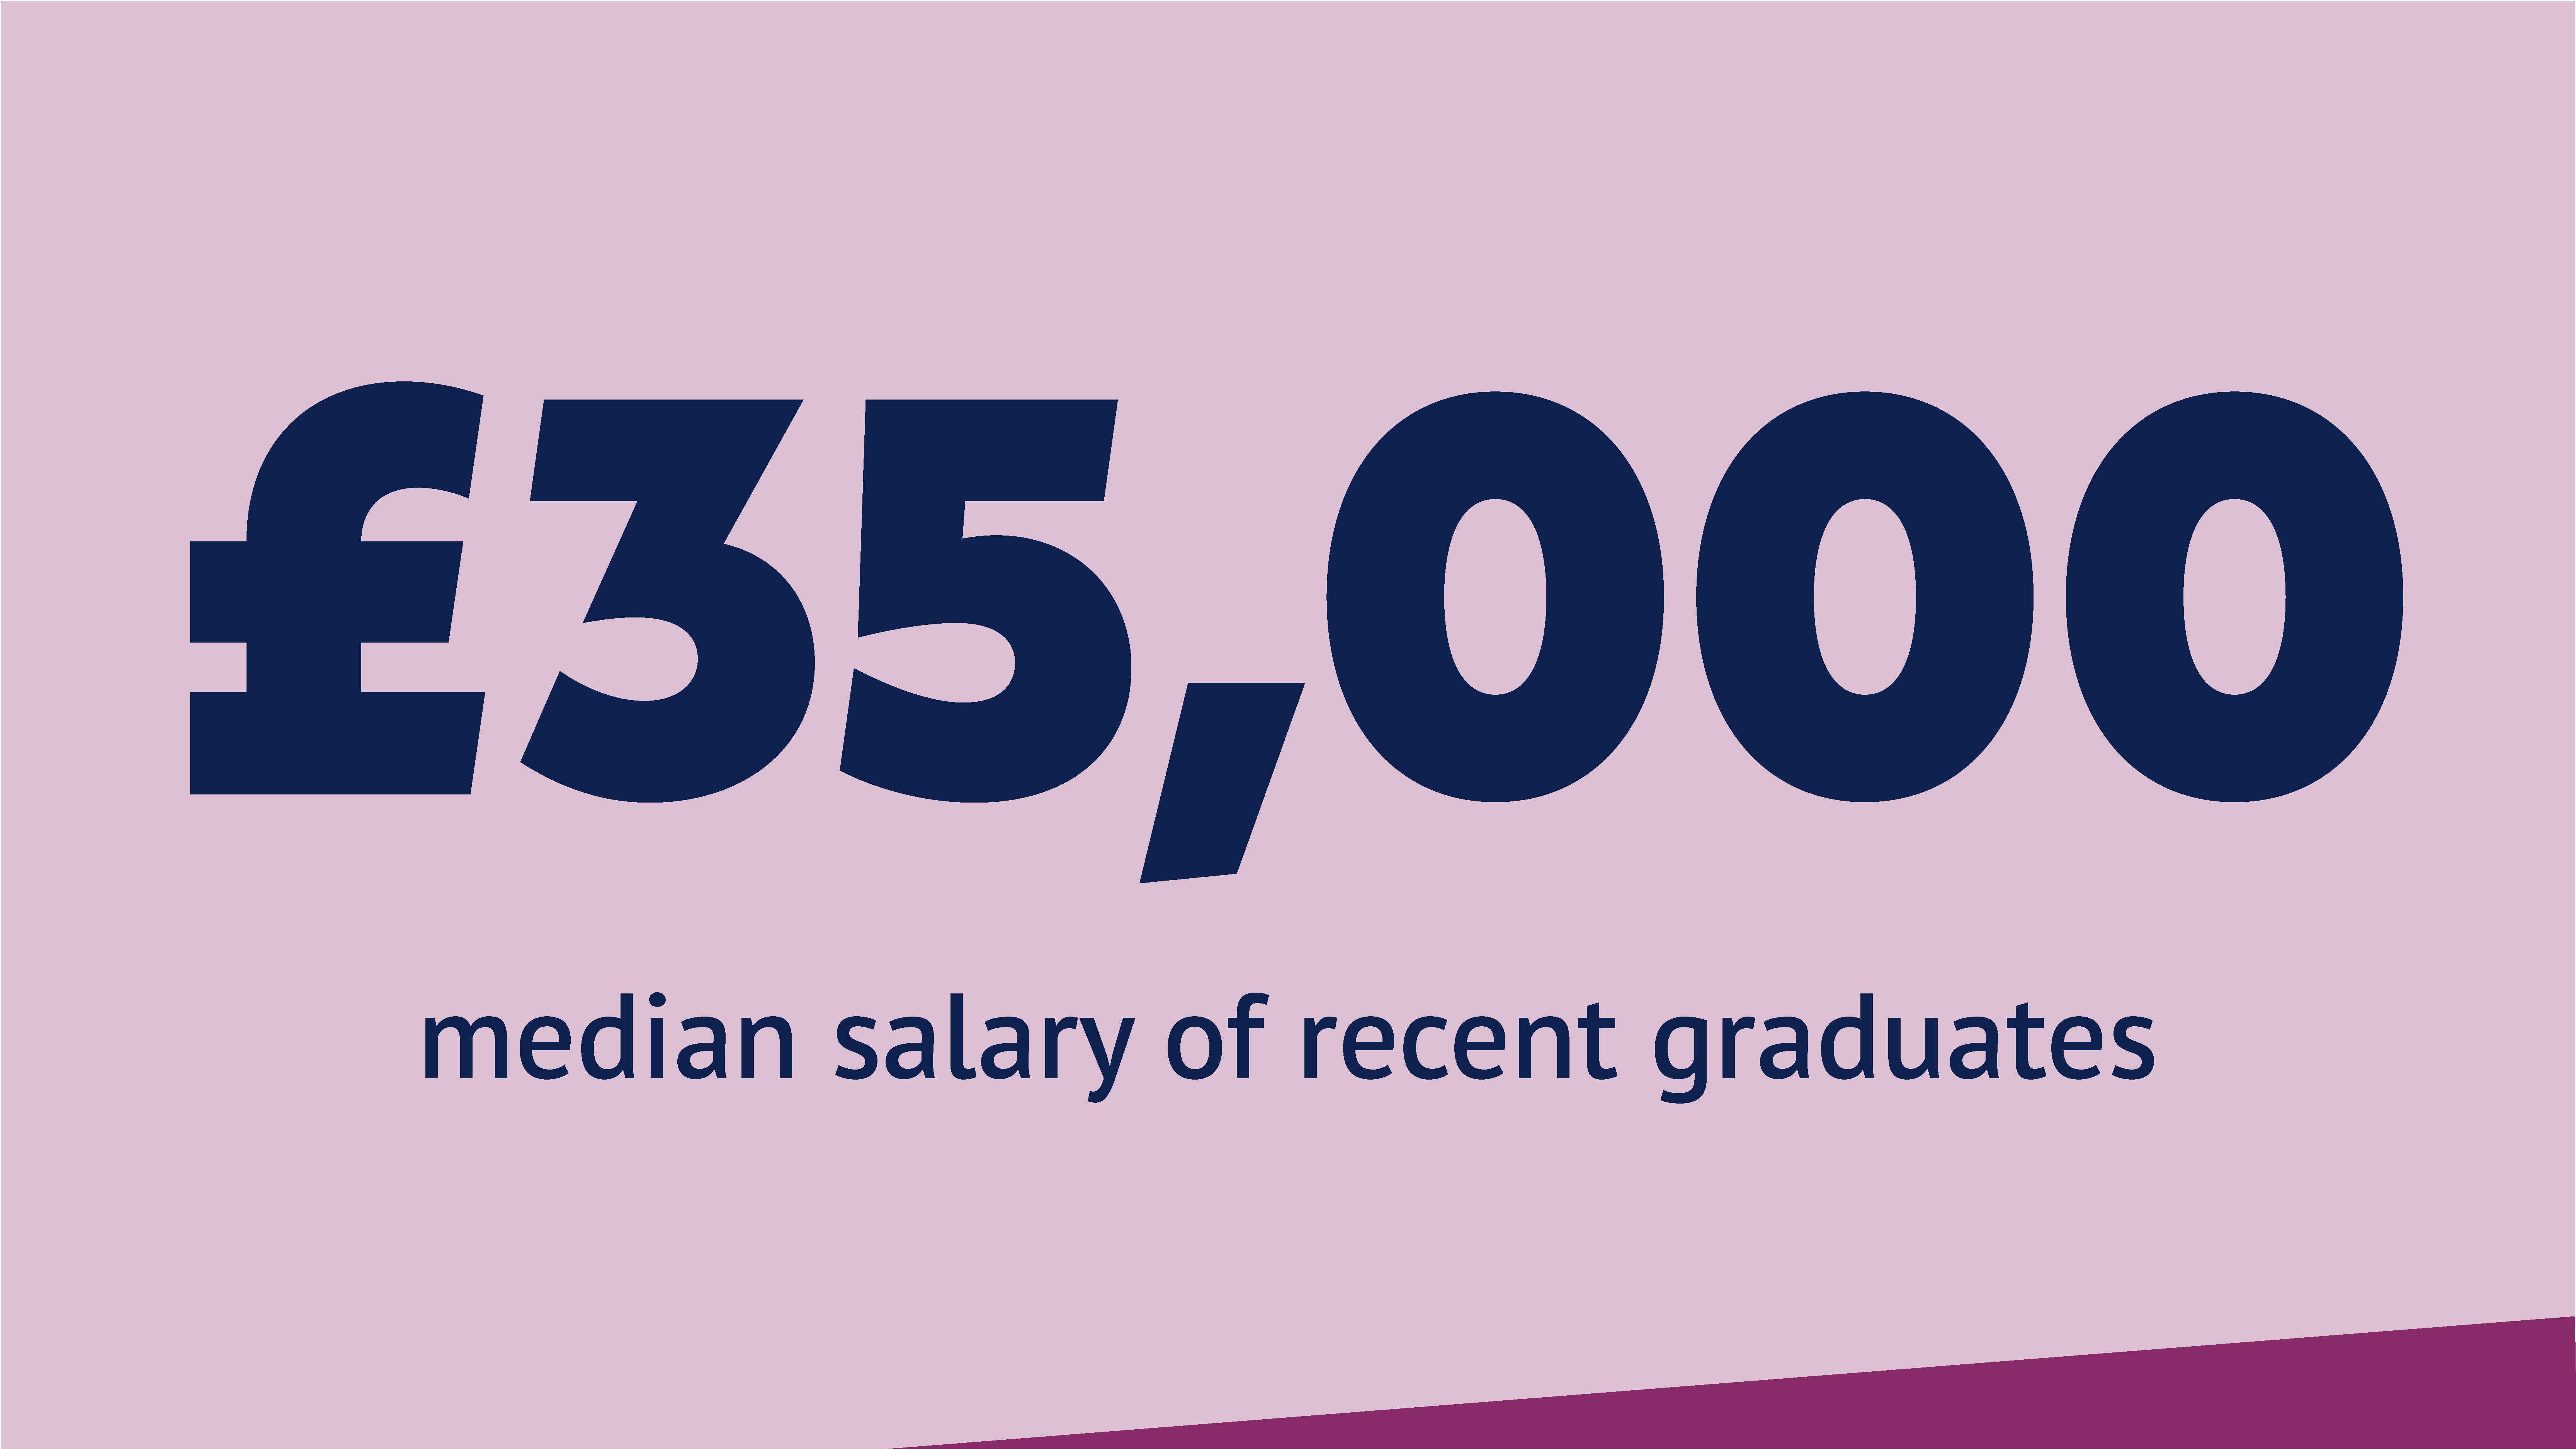 Median salary of recent graduates £35,000